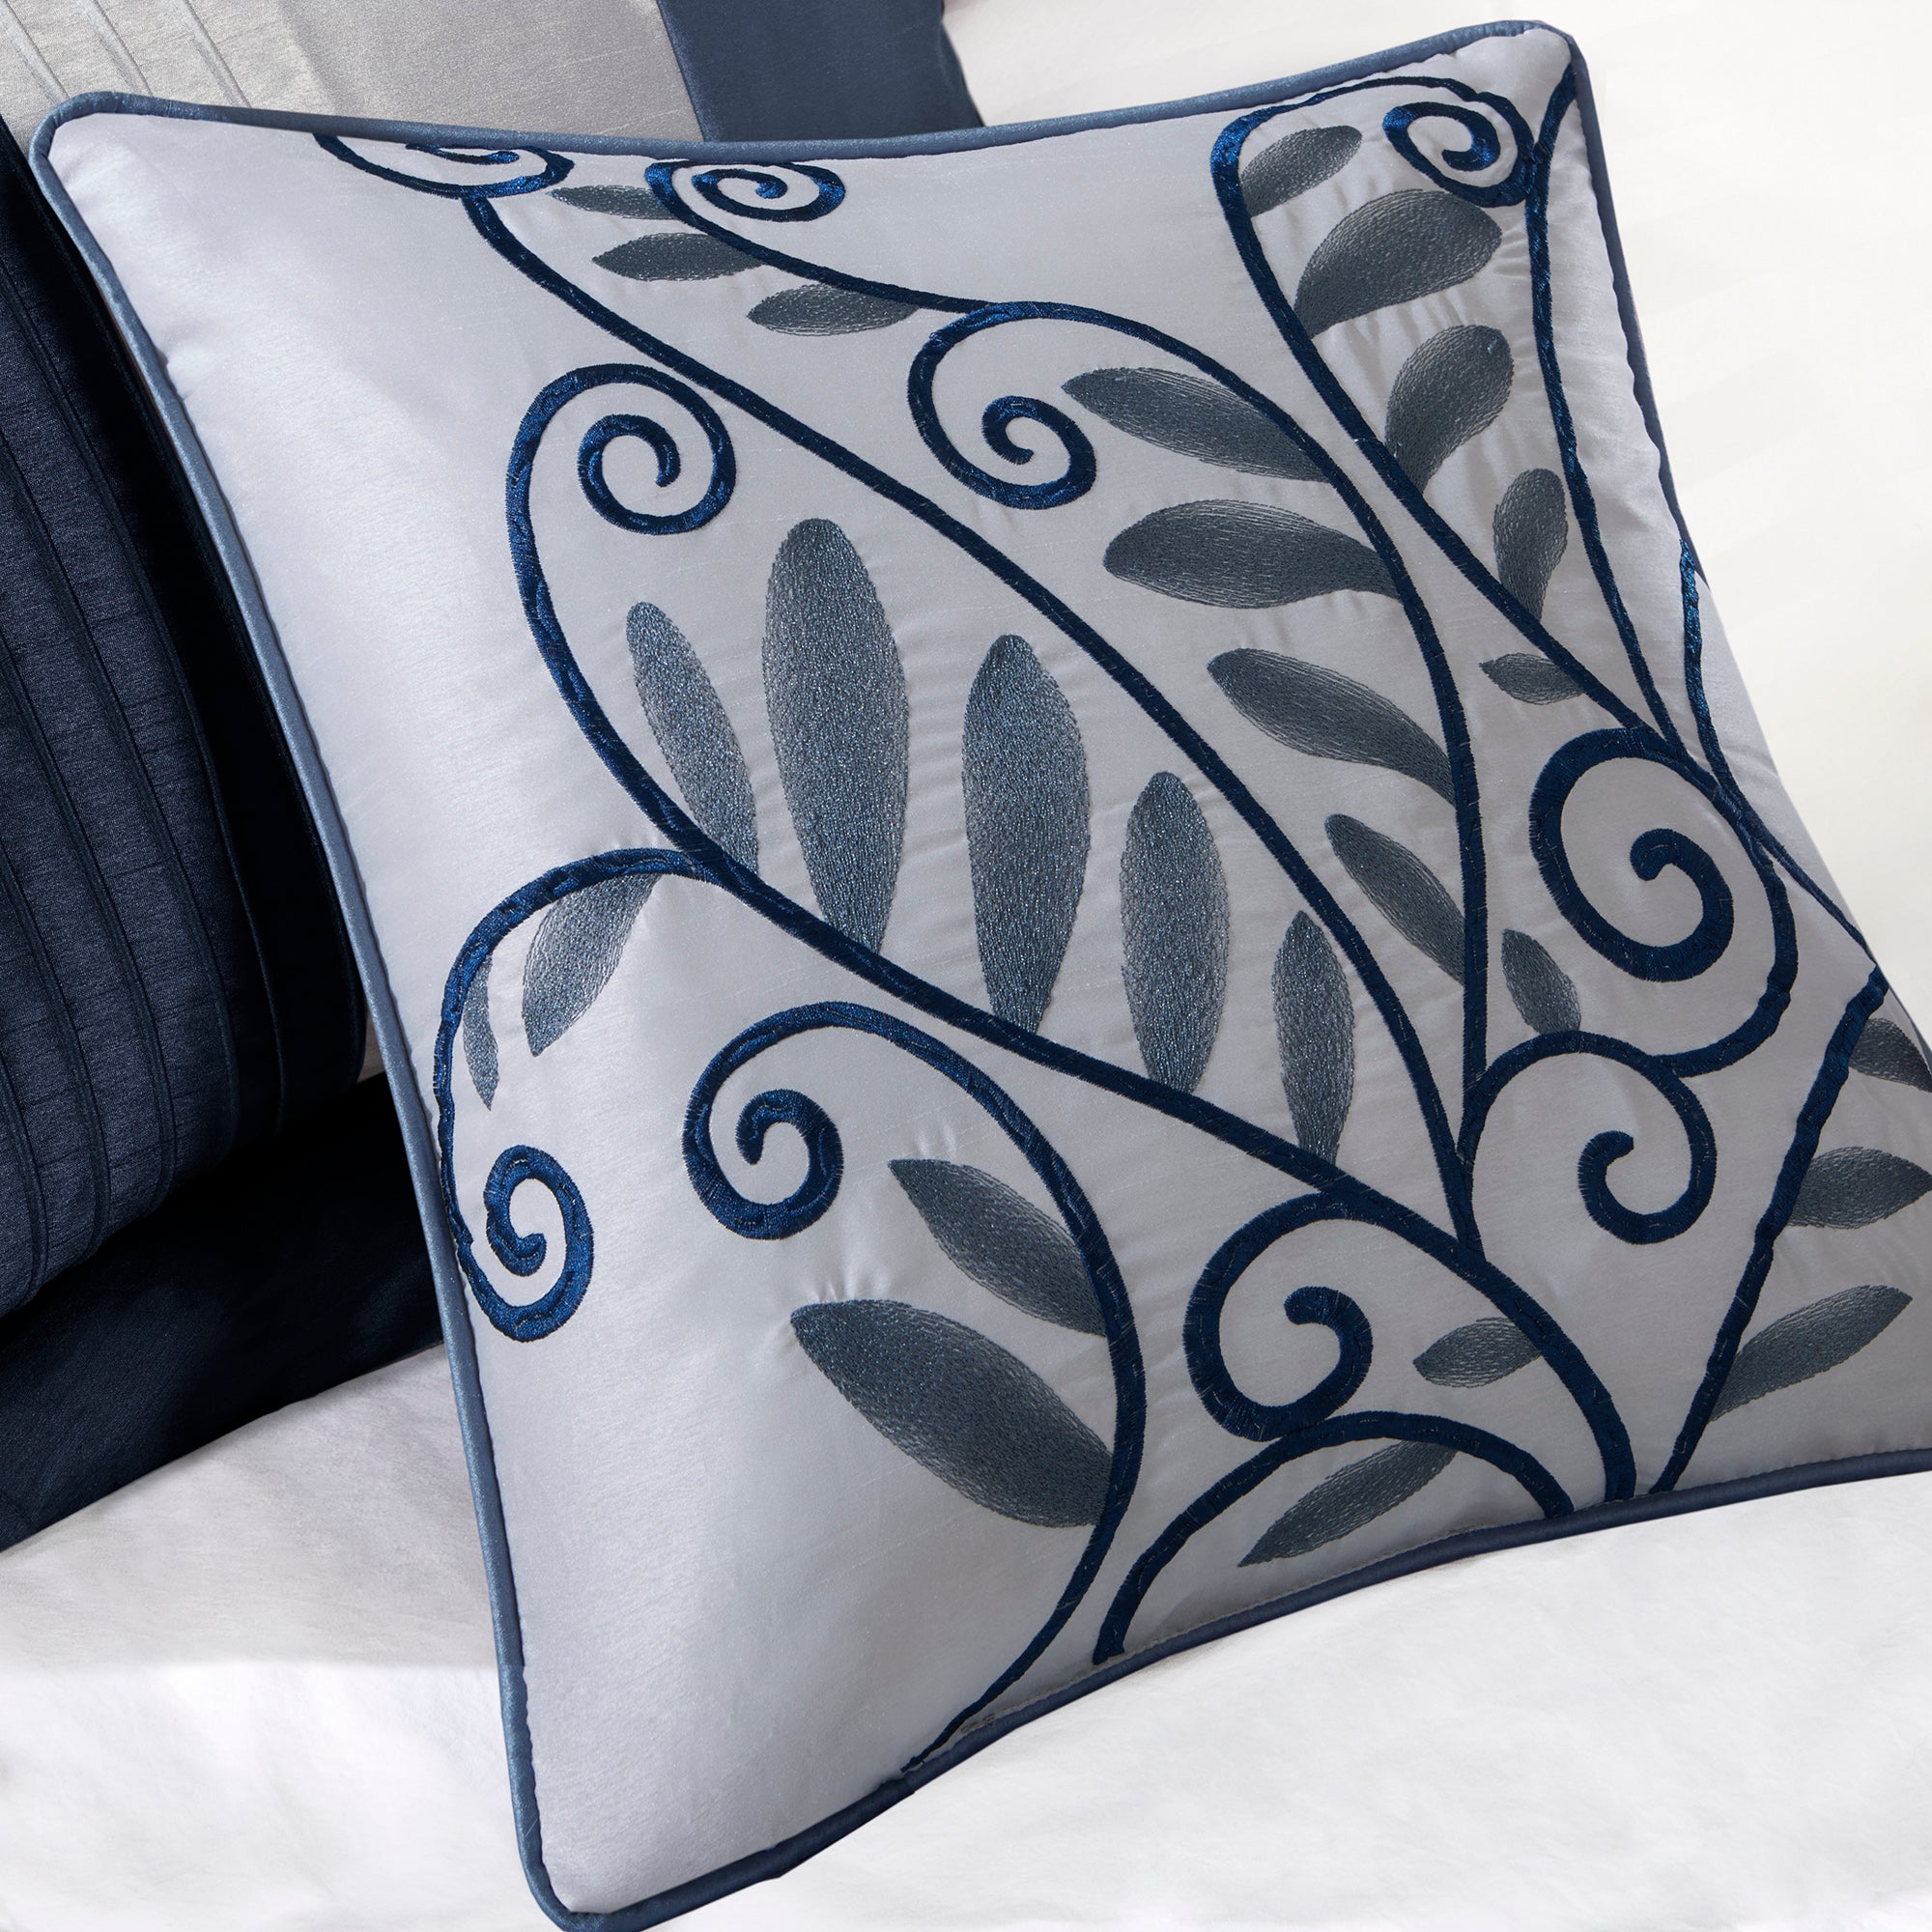 Madison Park Amherst Faux Silk Comforter Set-Casual Contemporary Design All Season Down Alternative Bedding, Matching Shams, Bedskirt, Decorative Pillows